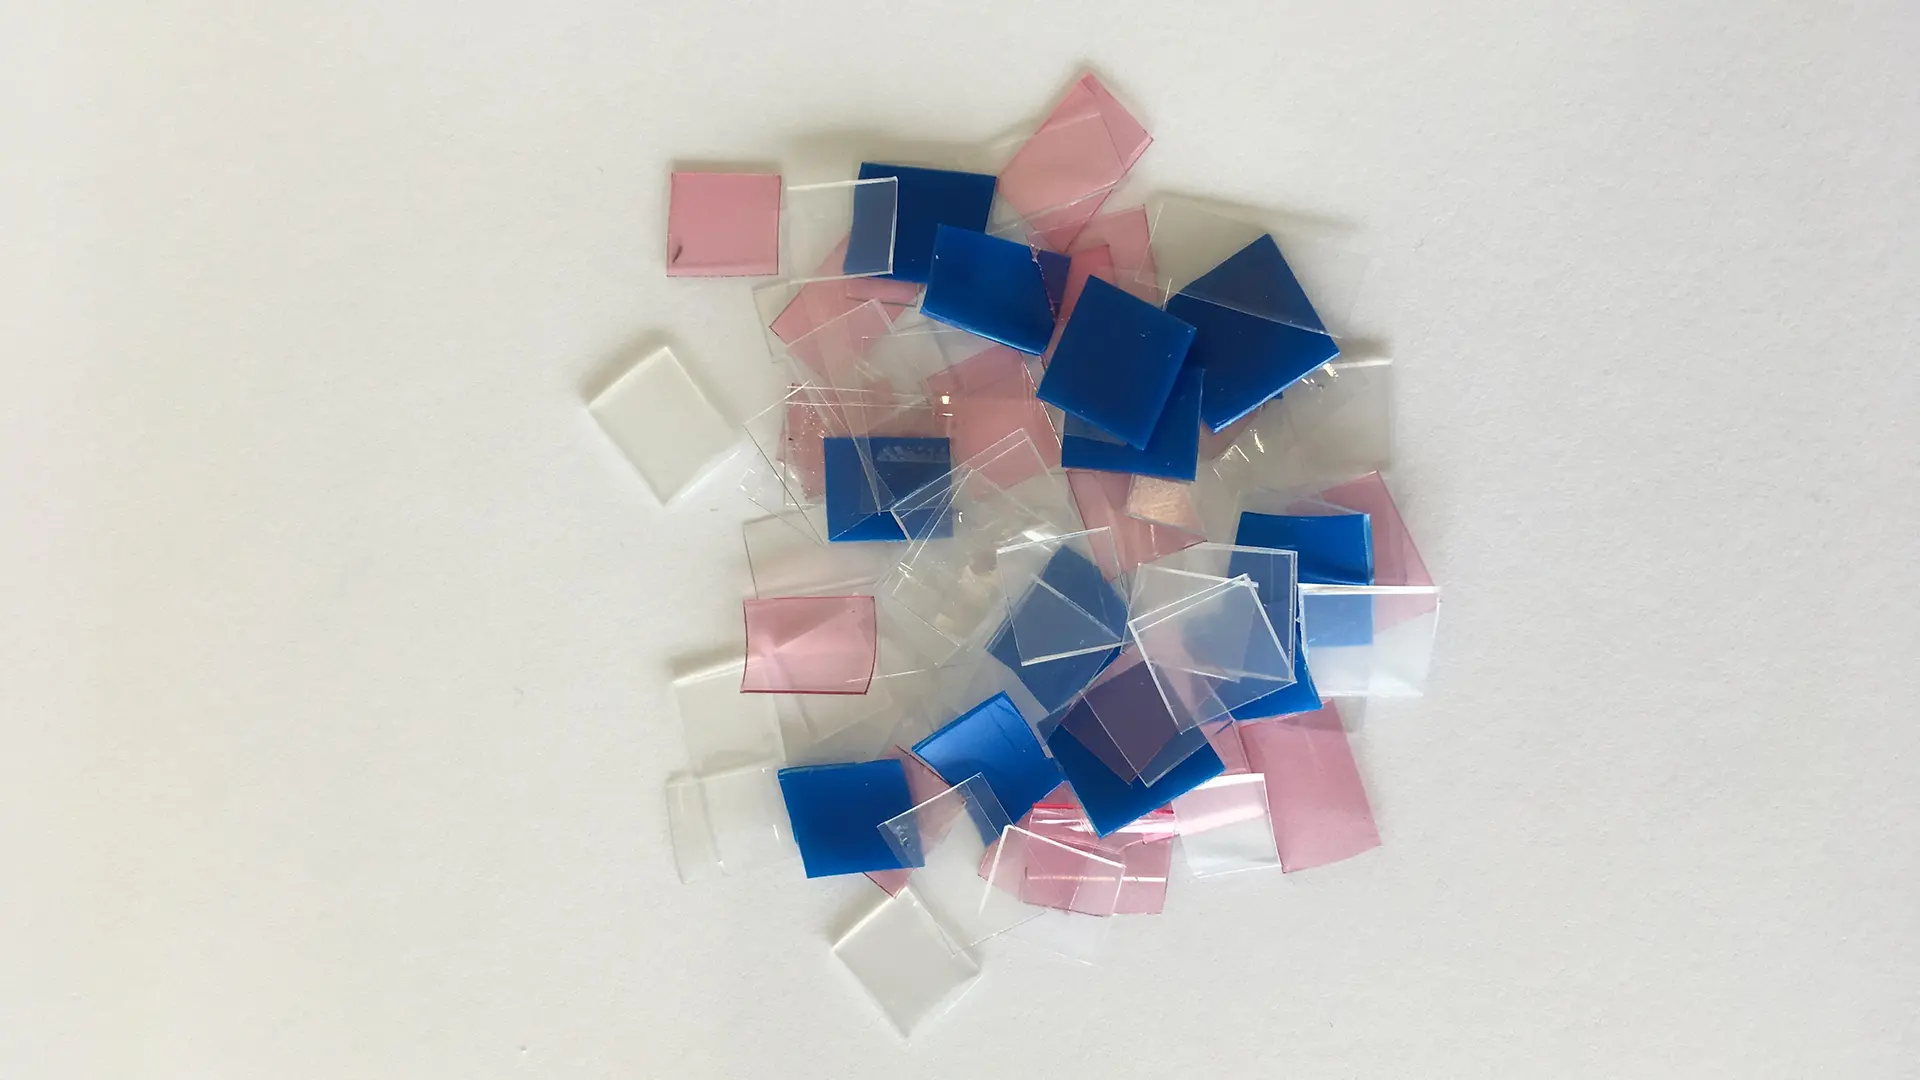 pequenos recortes de plástico azul, rosa branco e transparente